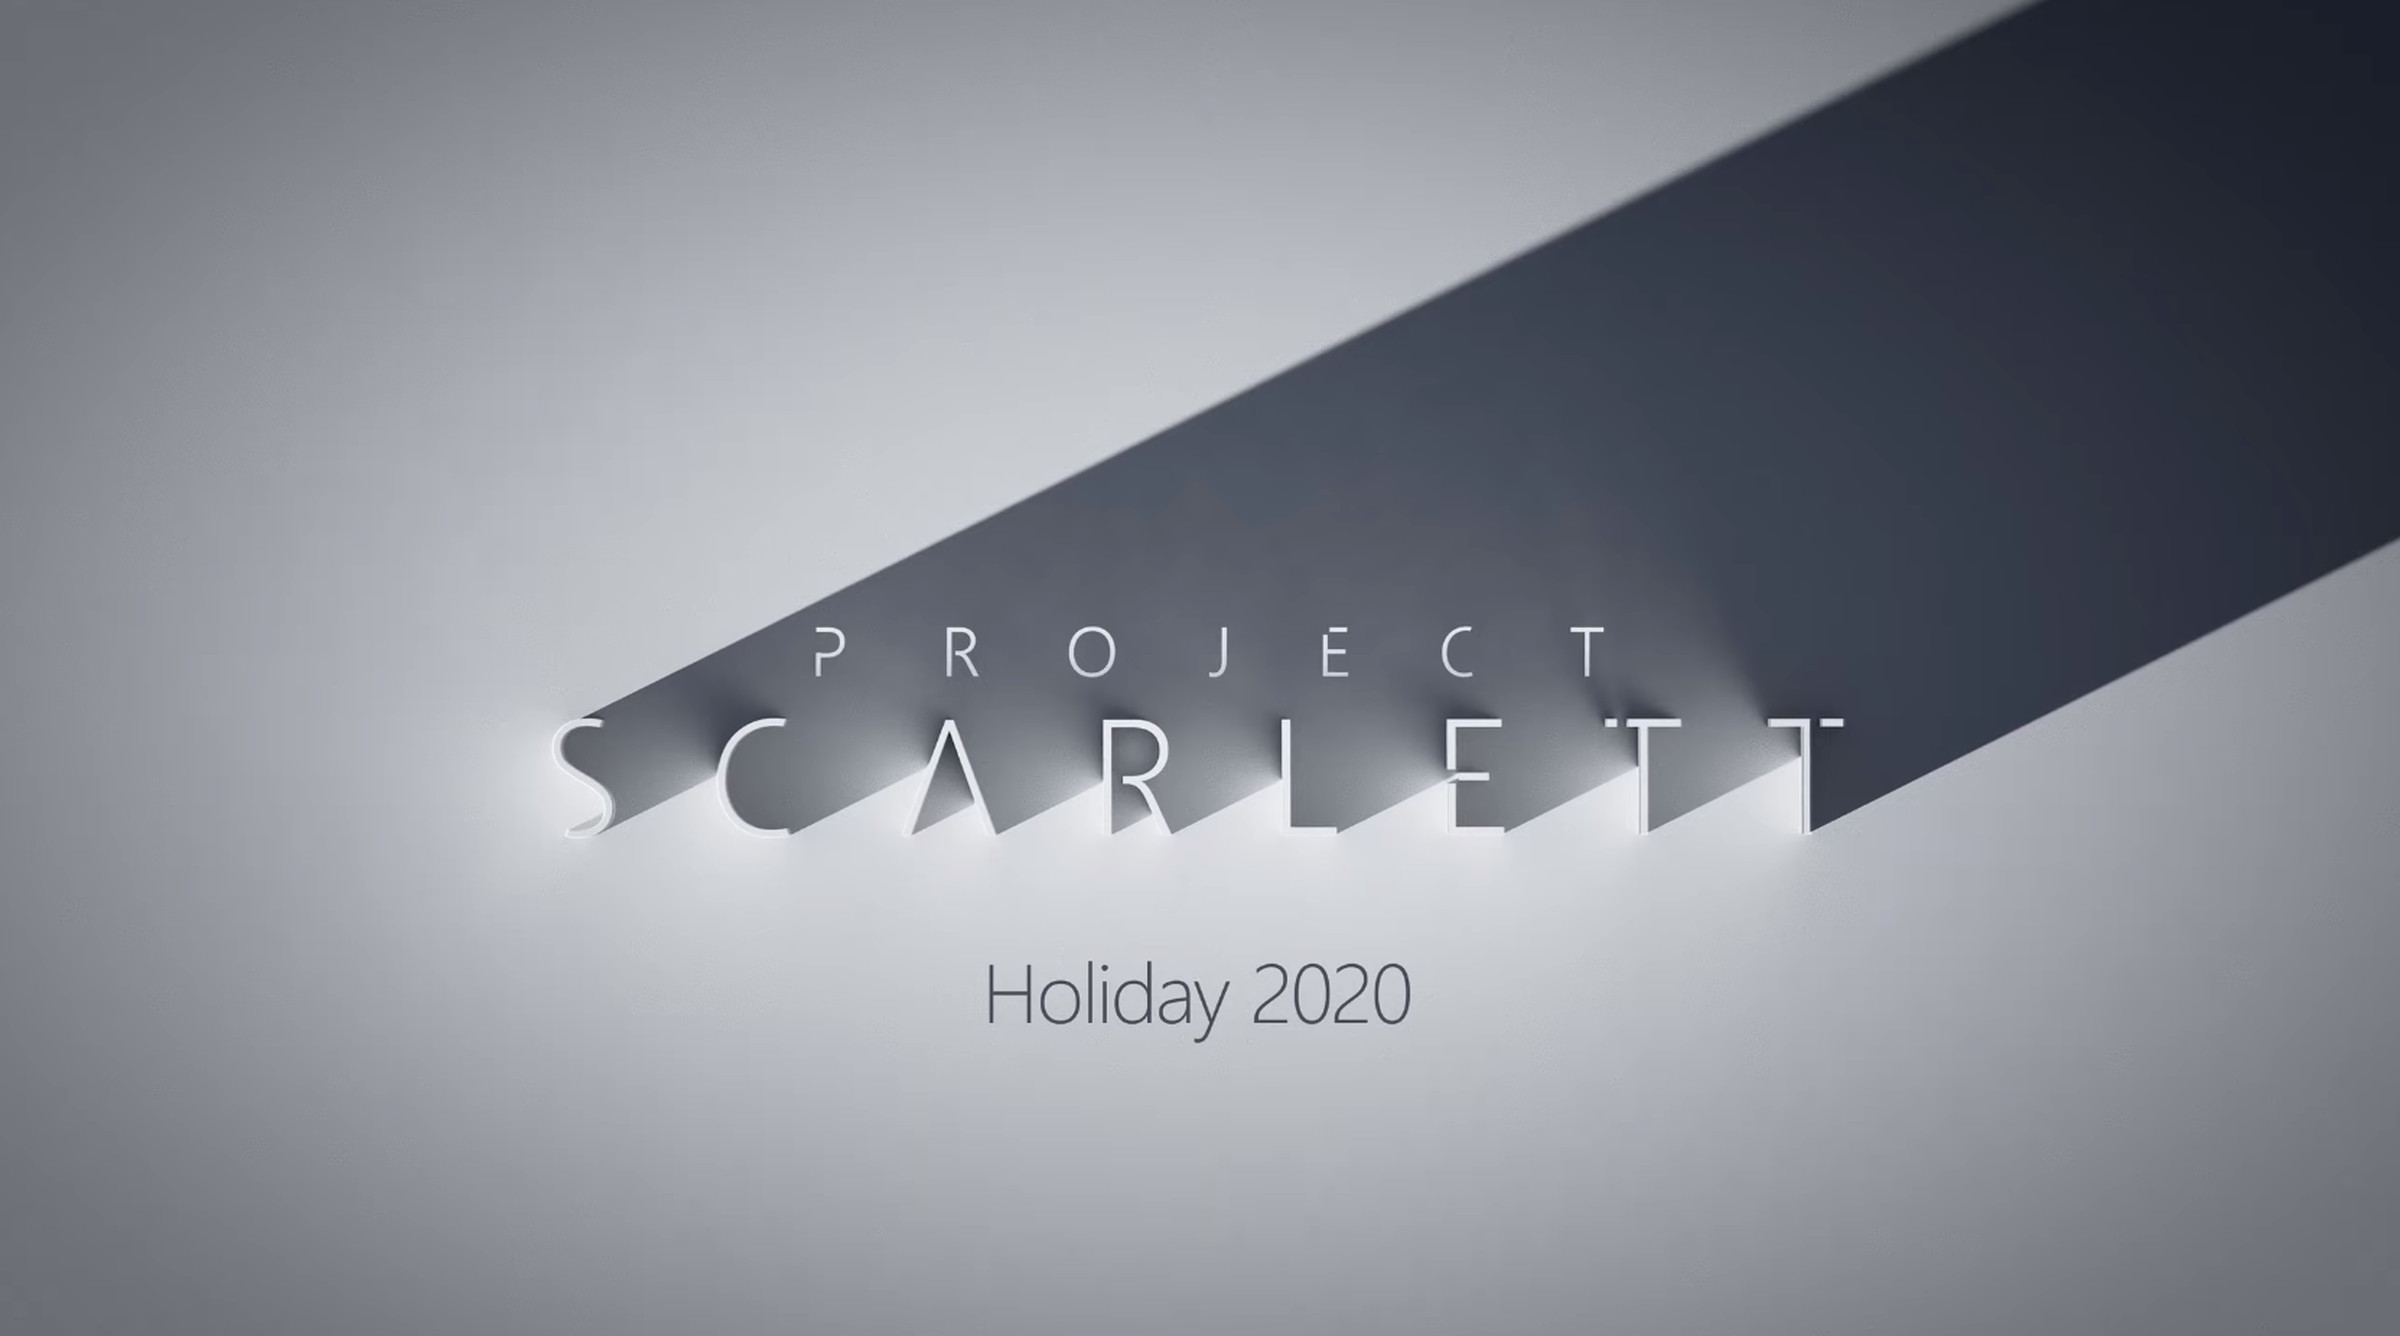 Microsoft’s next Xbox is Project Scarlett.